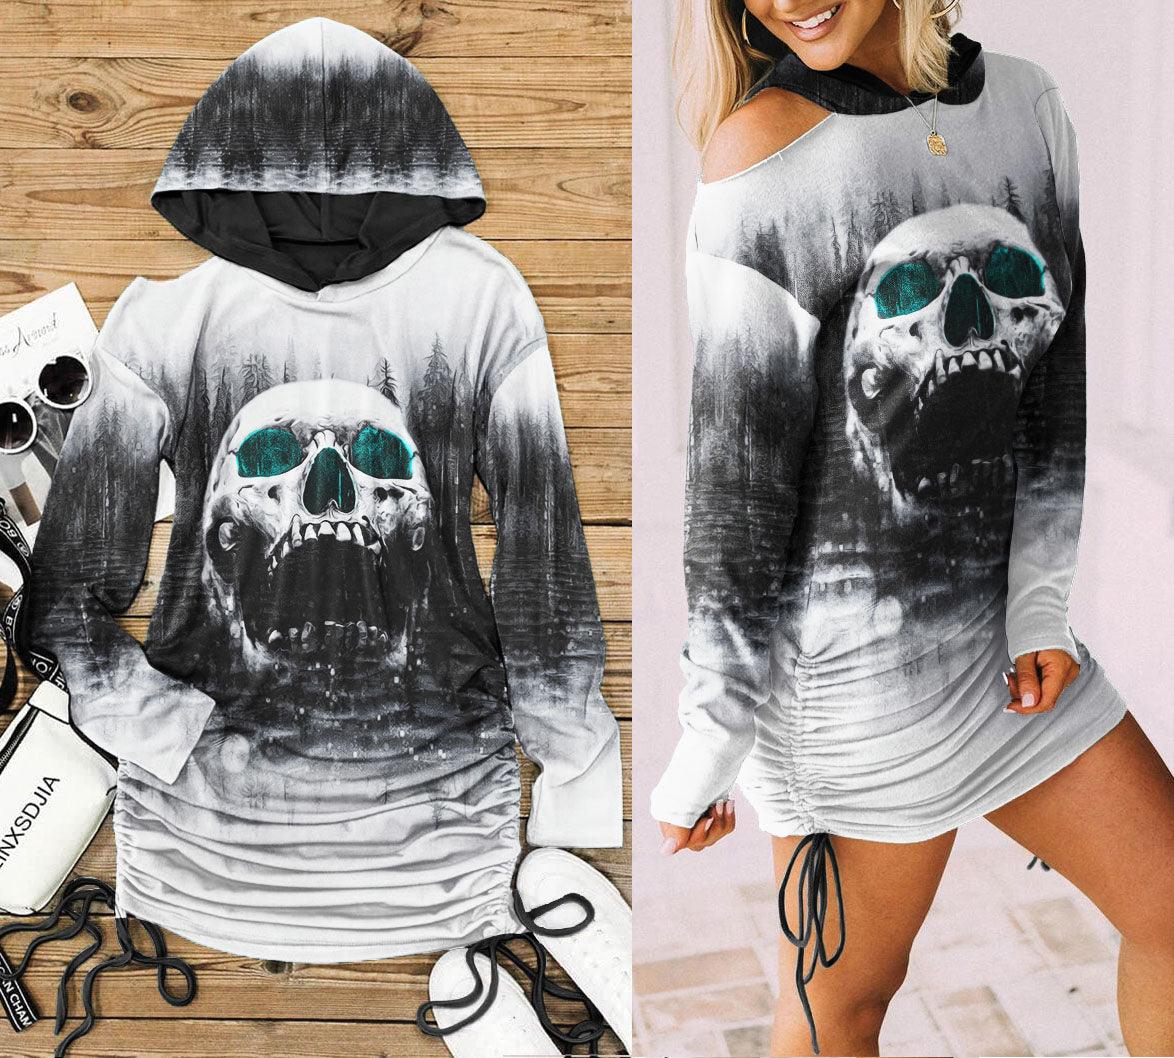 Black White Color Drawing Skull Print Open Shoulder Dress - Wonder Skull